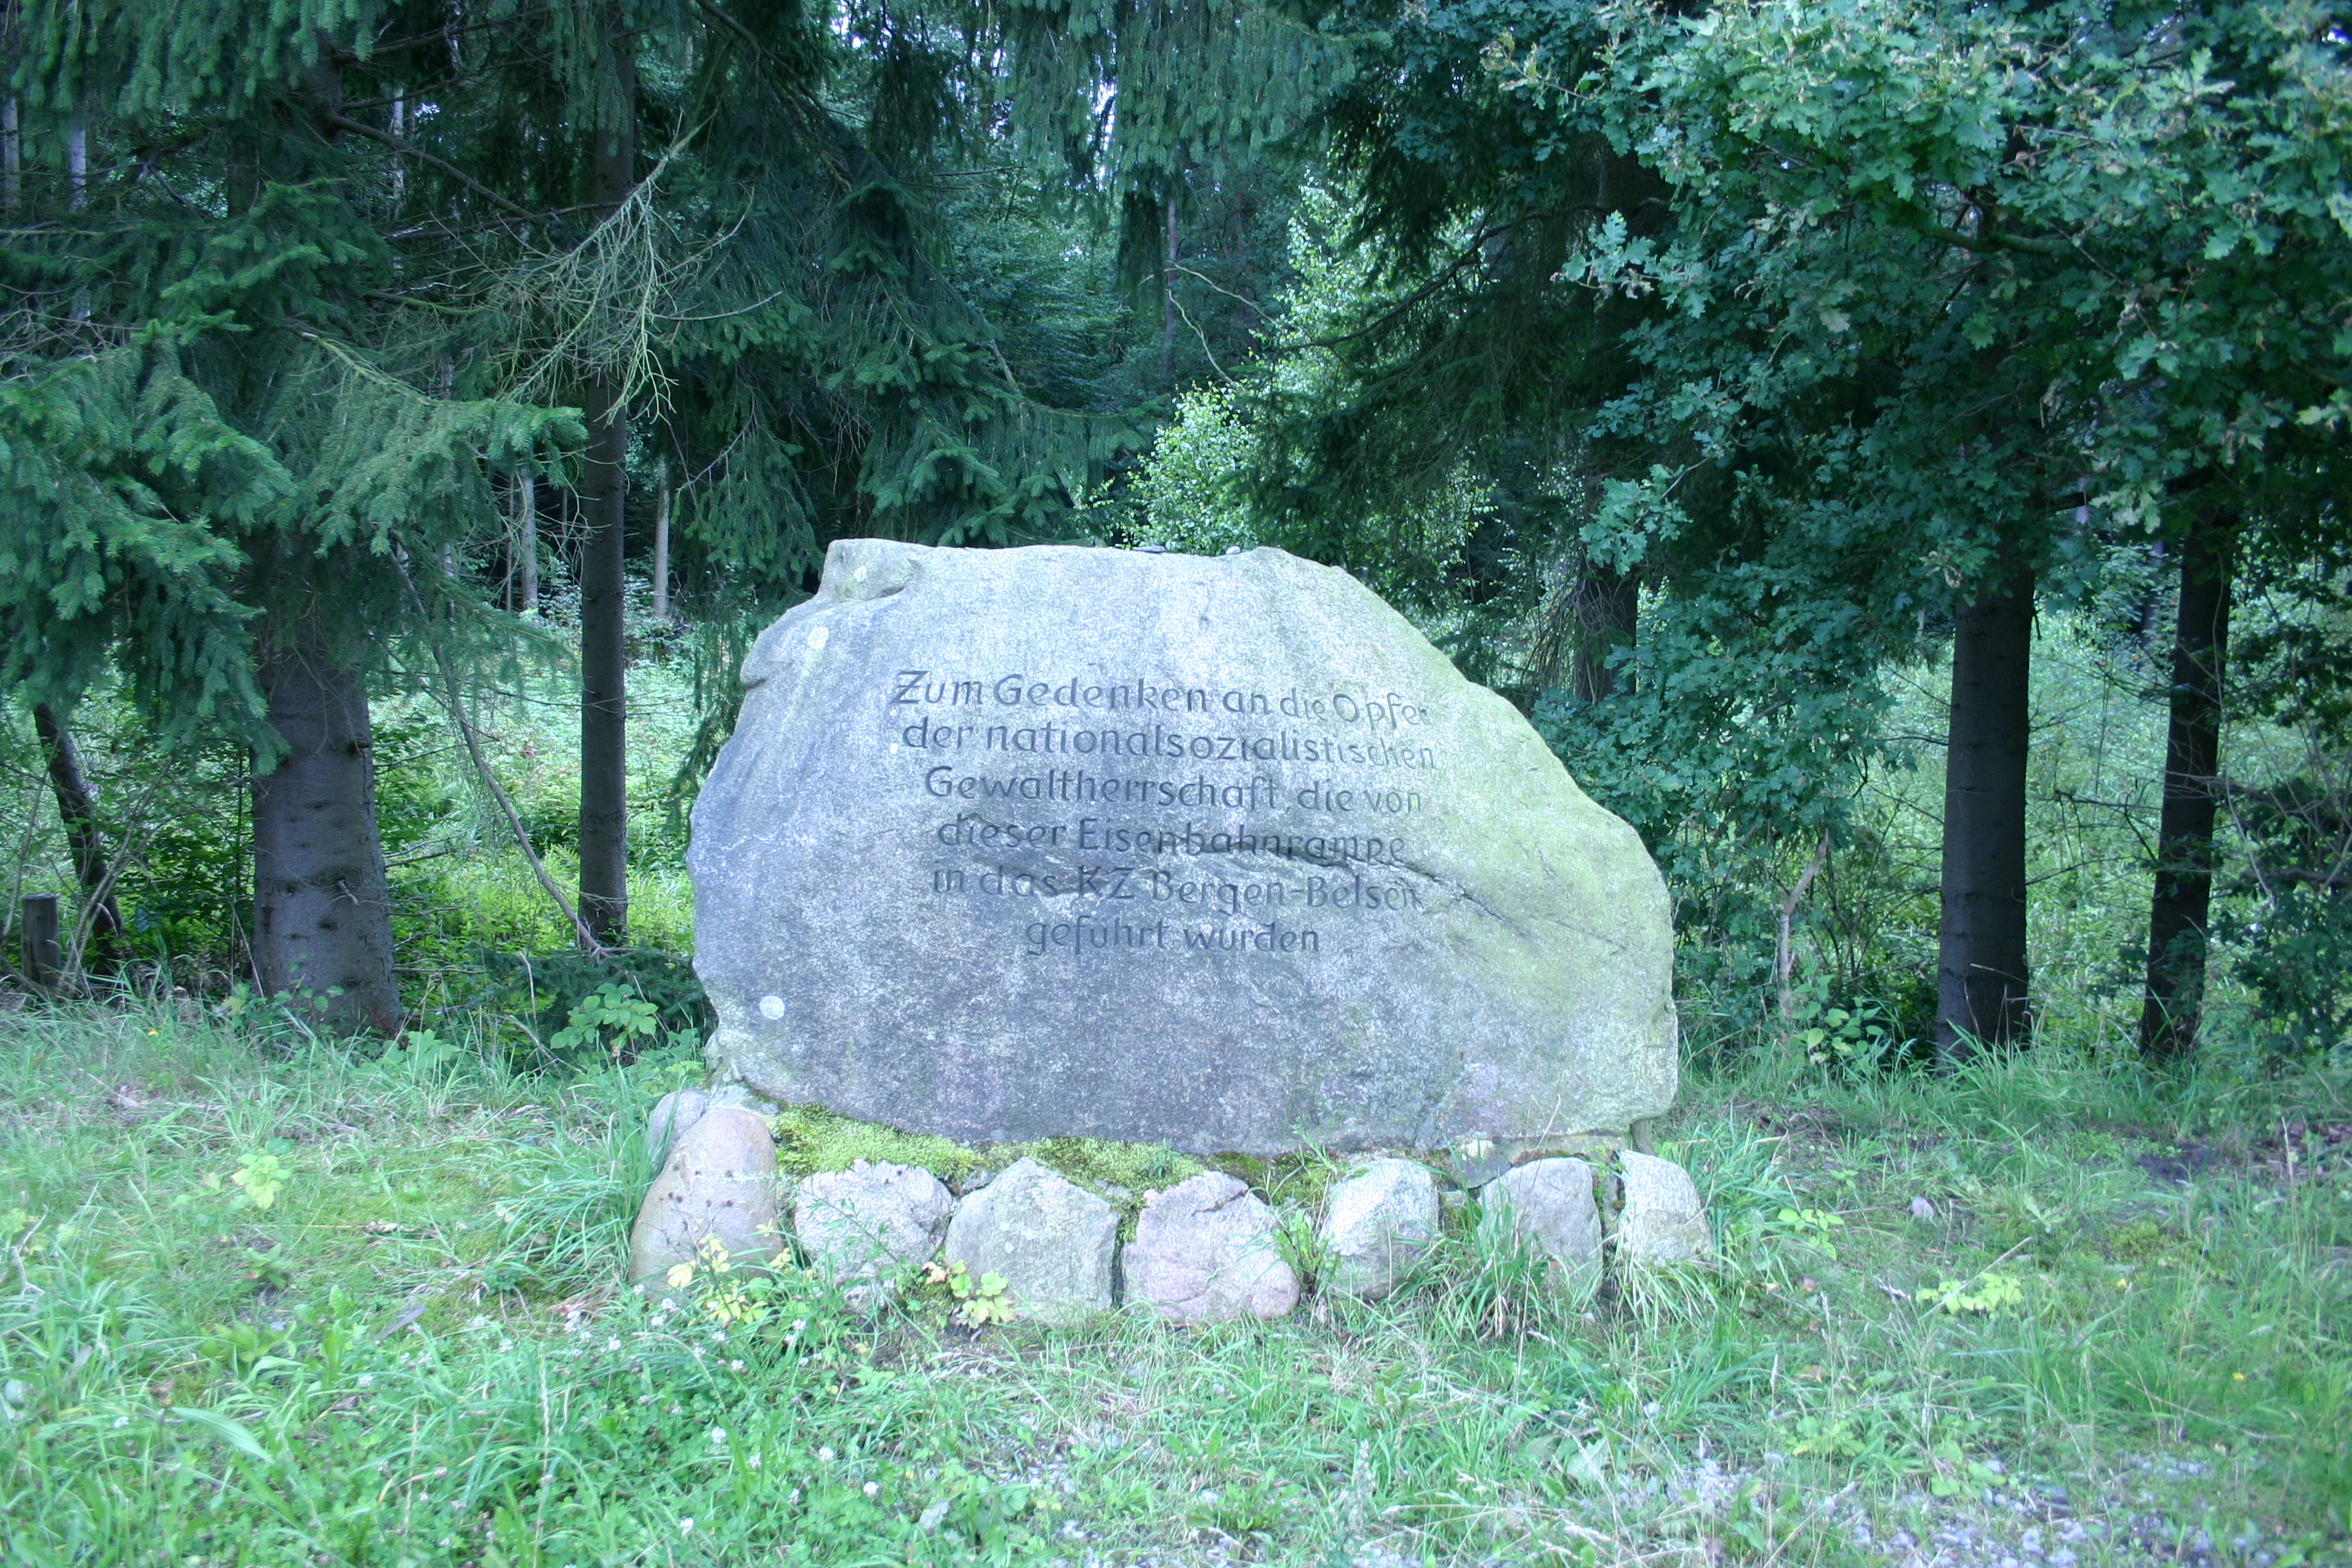 Monument at memorial site